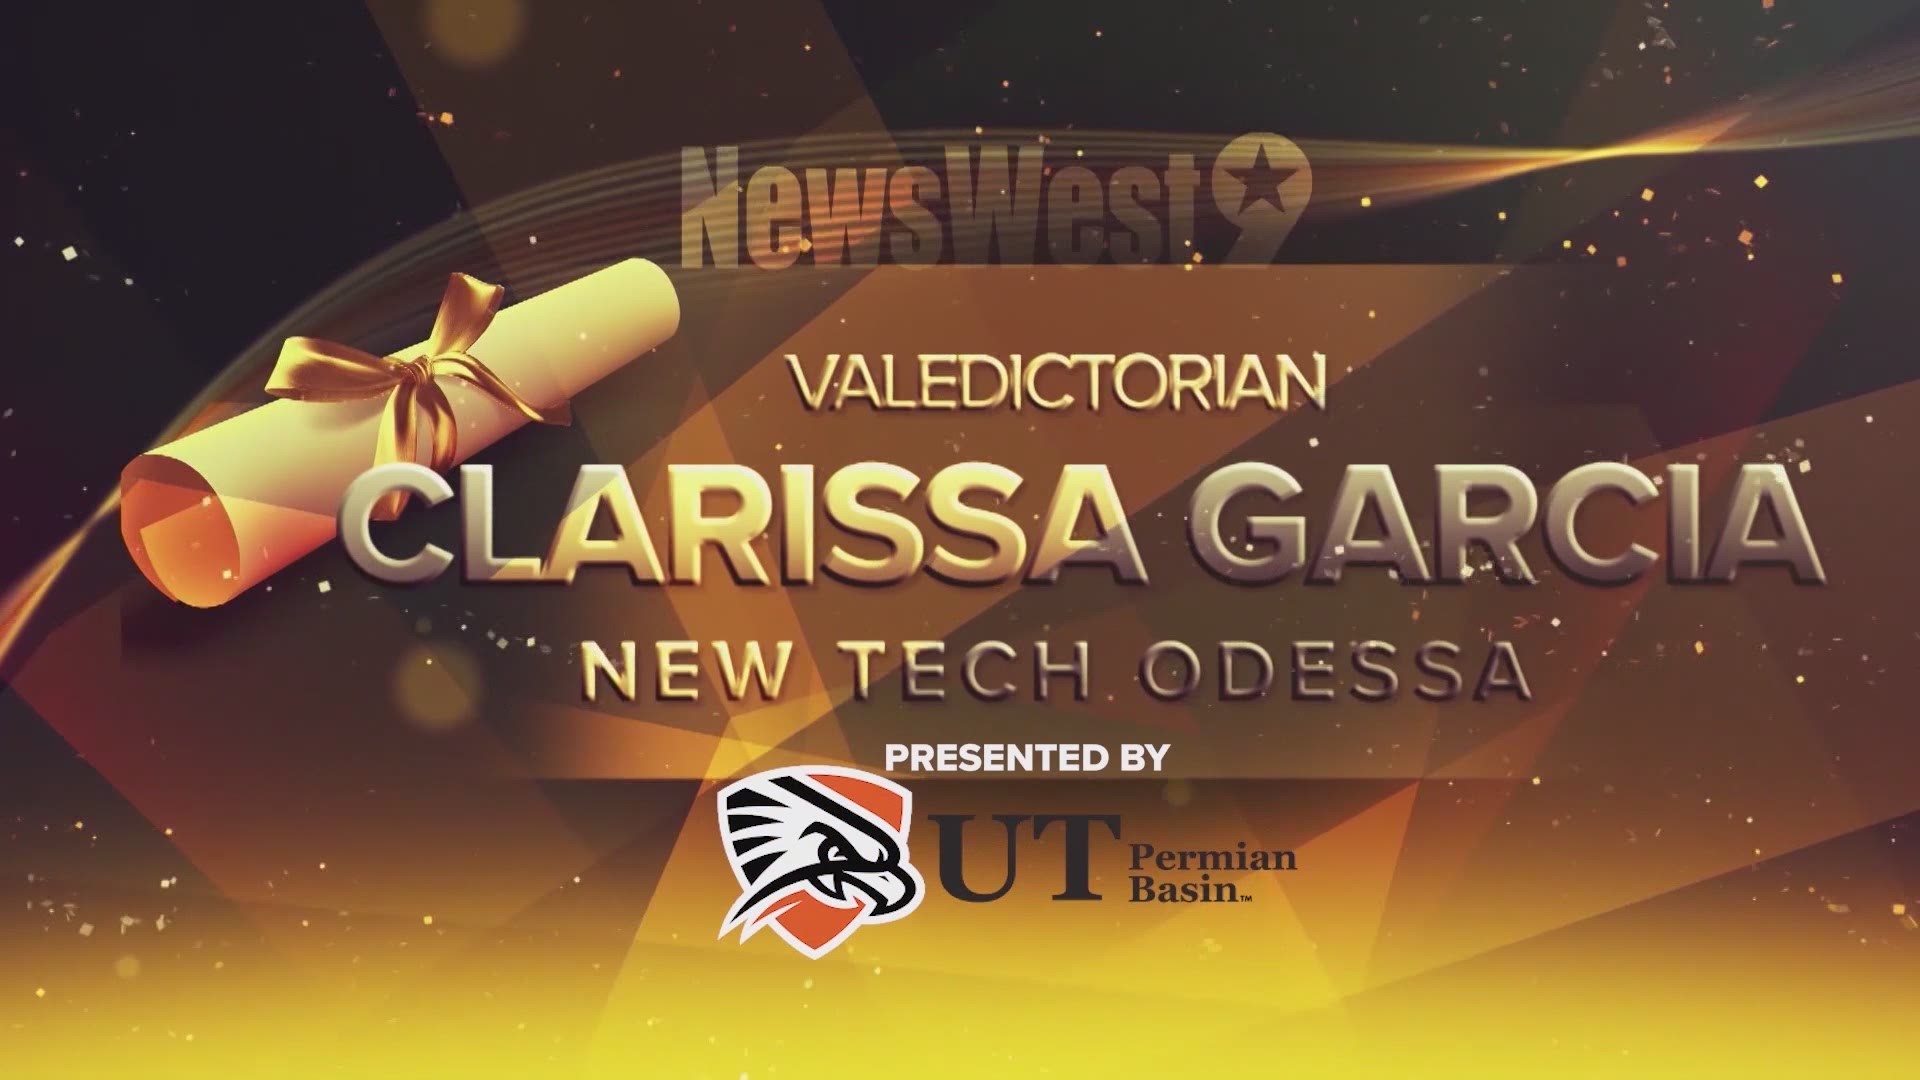 Clarissa Garcia delivers the Valedictorian speech for New Tech Odessa